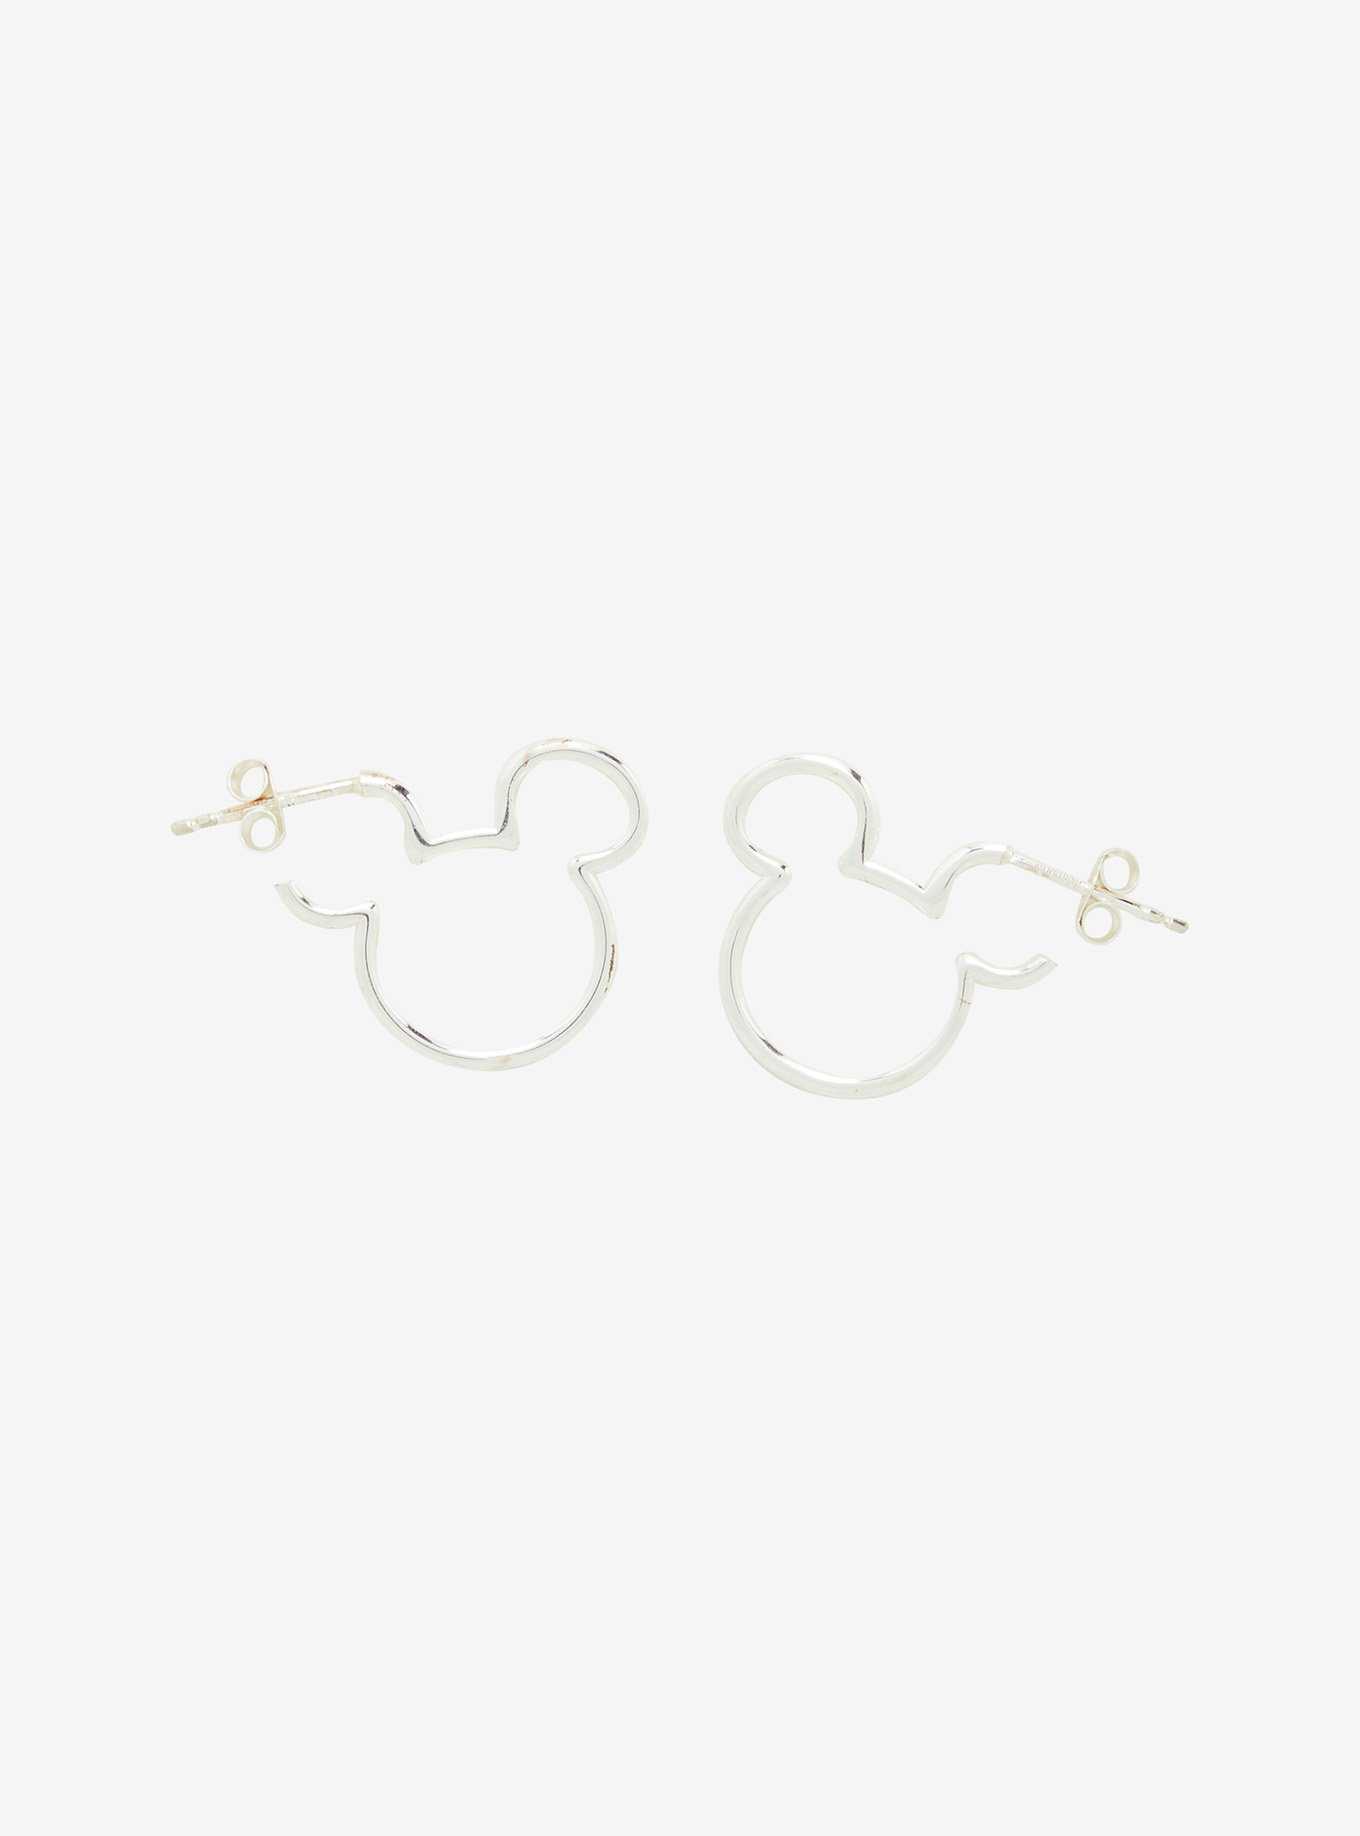 Jacmel Jewelry Disney Mickey Mouse Silver Silhouette Stud Earrings, , hi-res